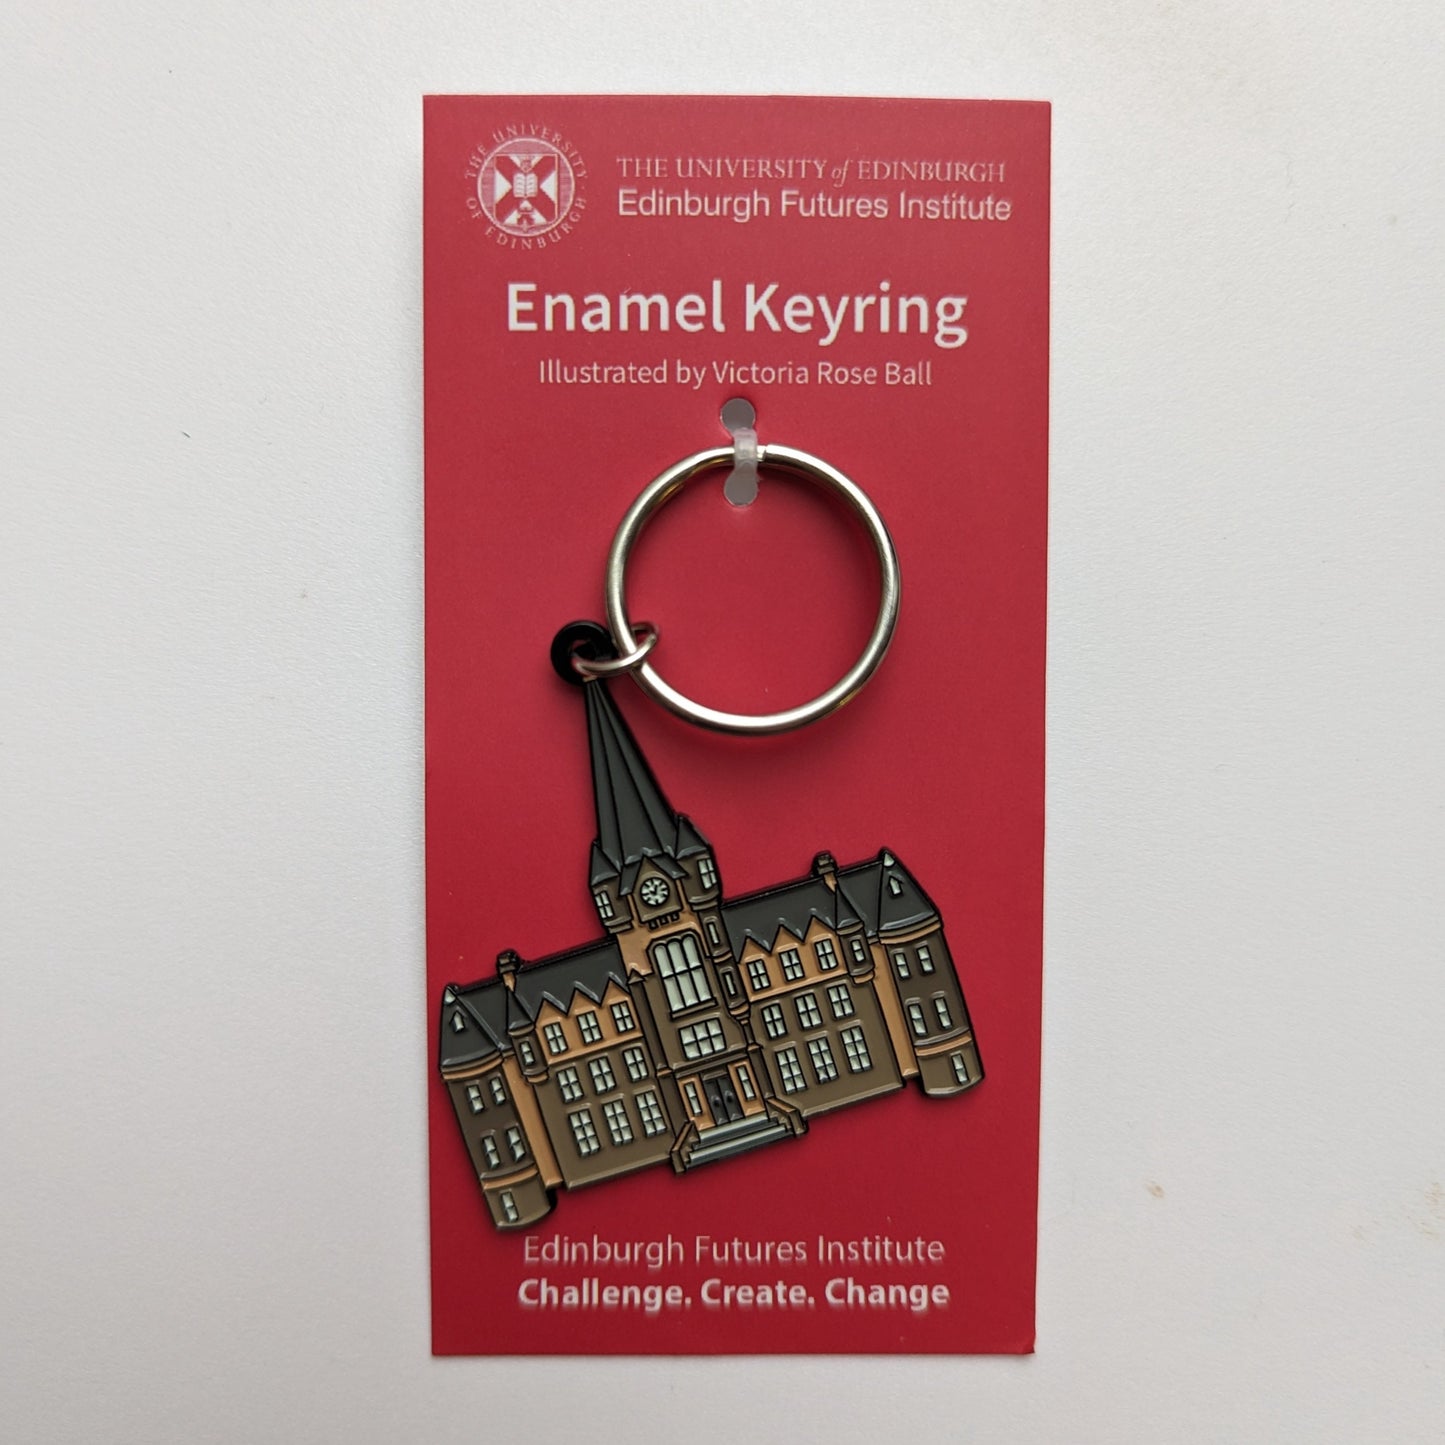 Enamel keyring of the Edinburgh Futures Institute